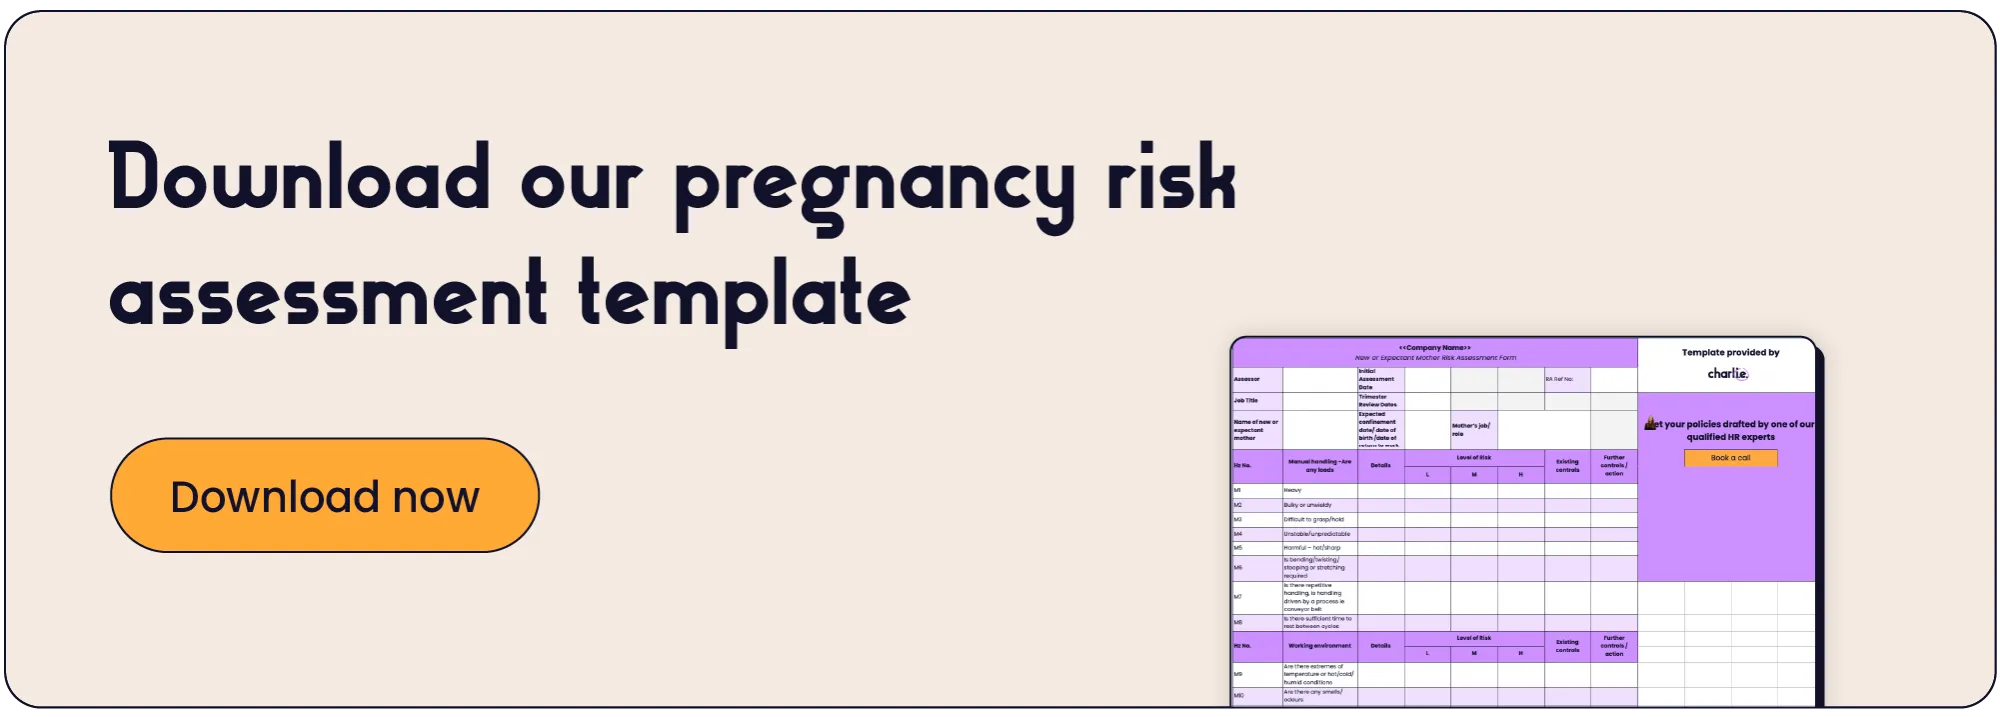 Download our pregnancy risk assessment template.webp